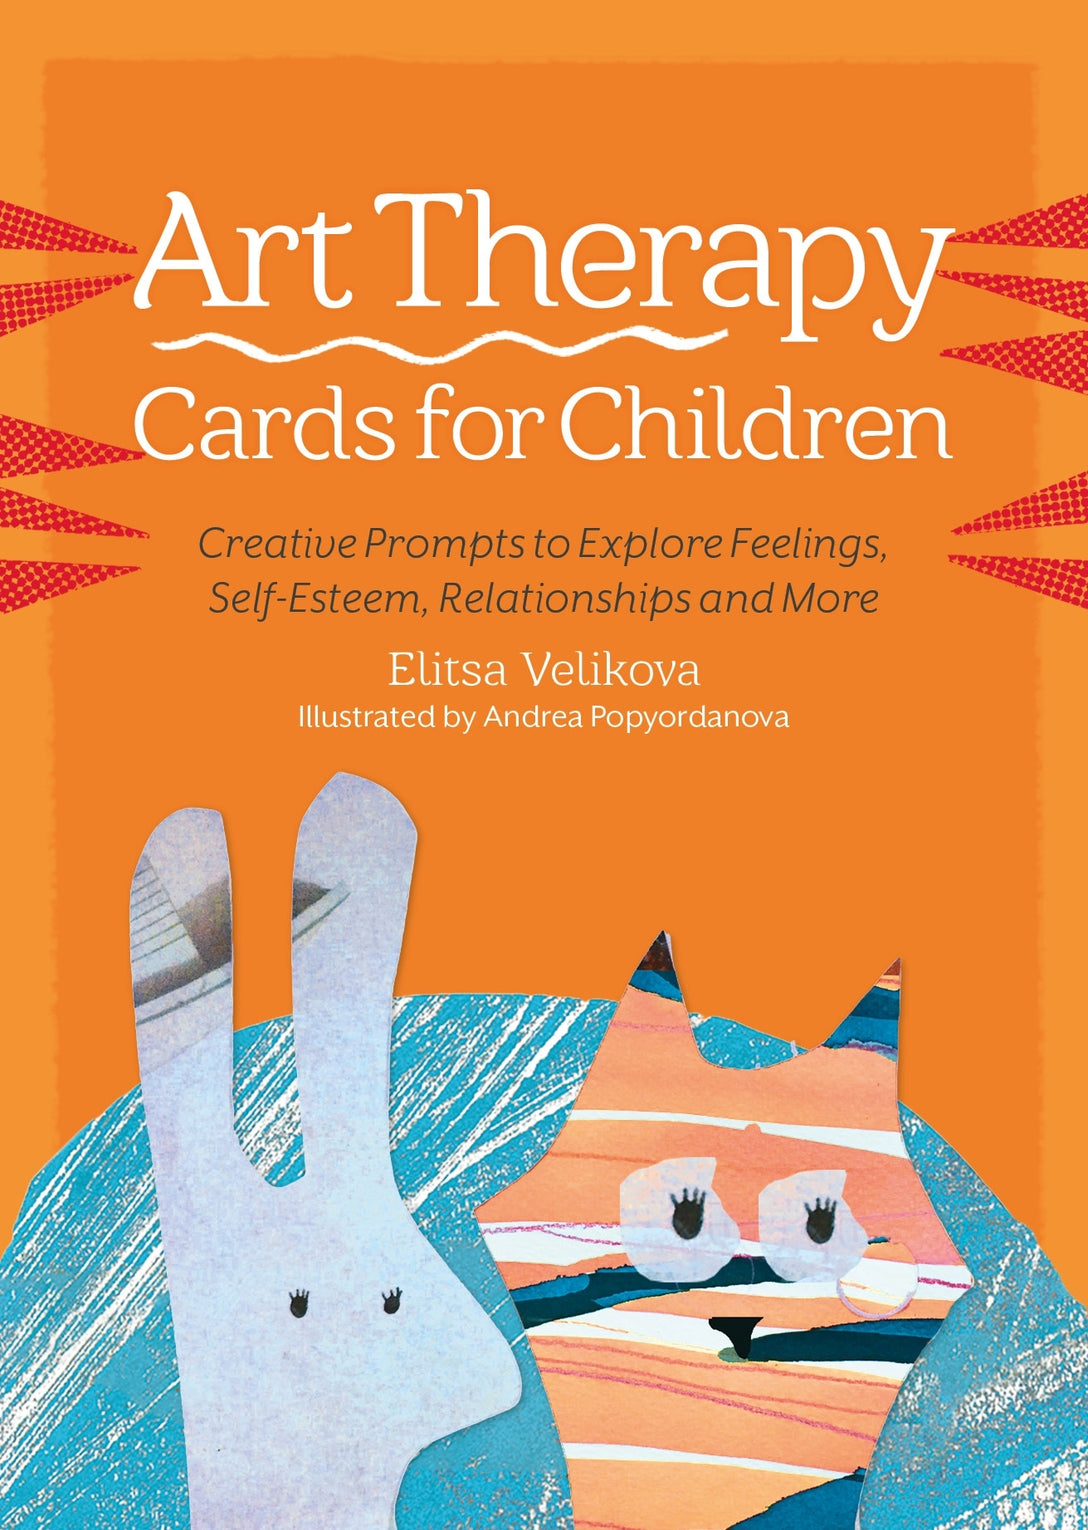 Art Therapy Cards for Children by Elitsa Velikova, Andrea Popyordanova